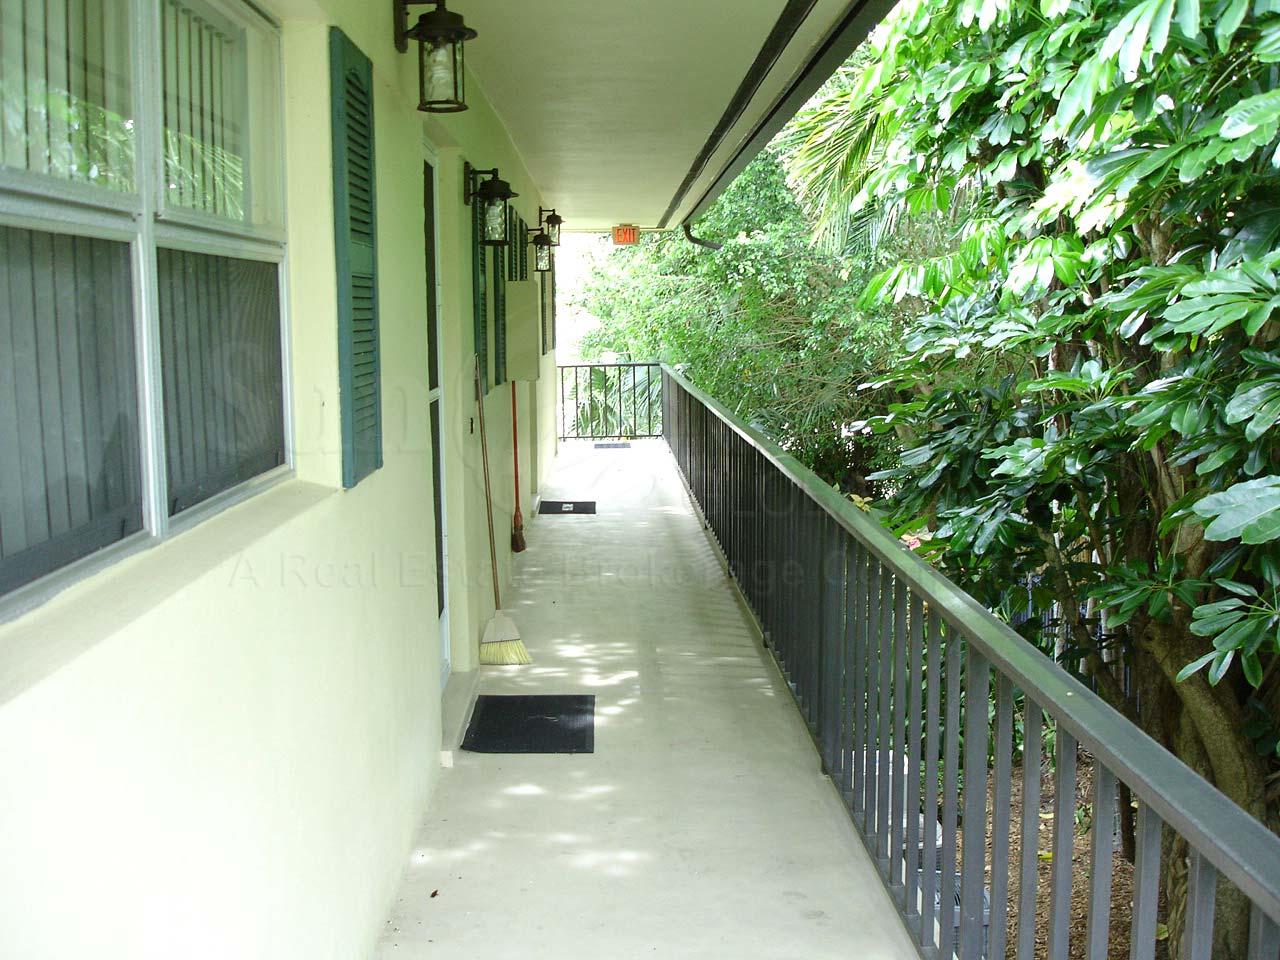 Downs Town Outdoor Hallway